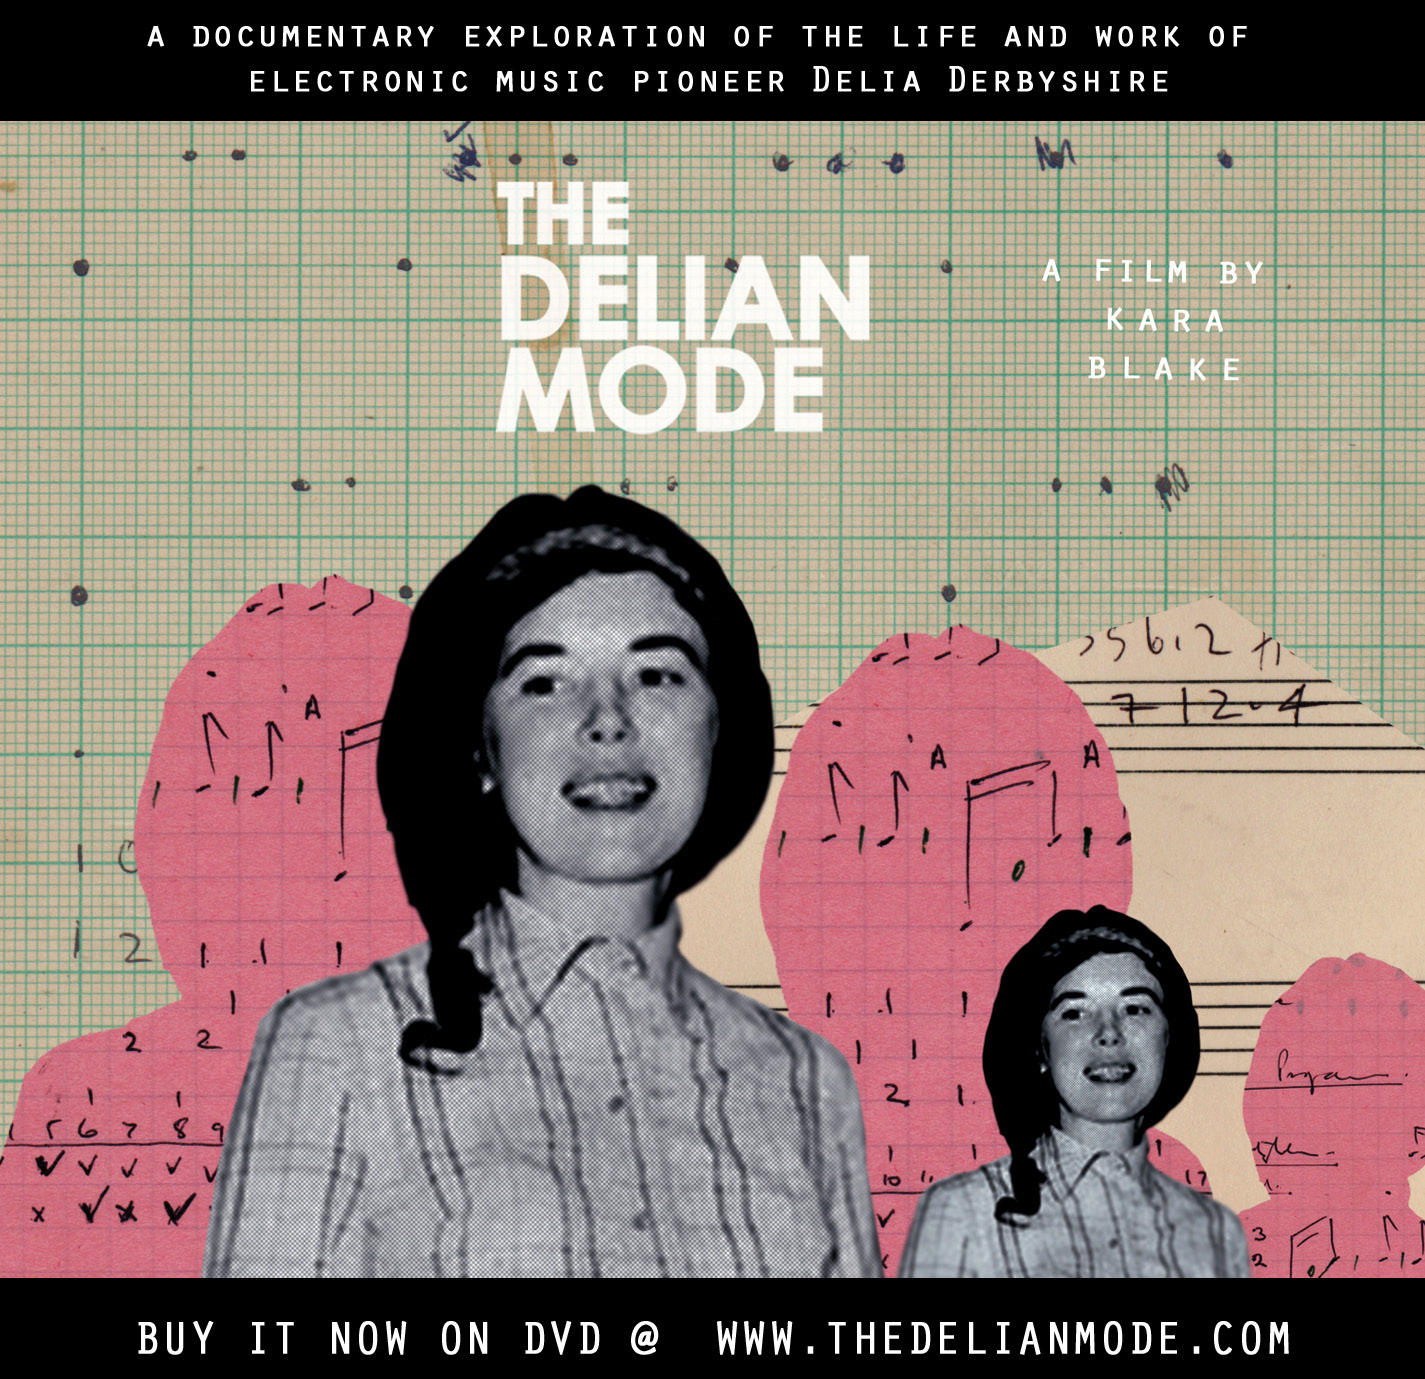  - Kara Blake - The Delian Mode cover